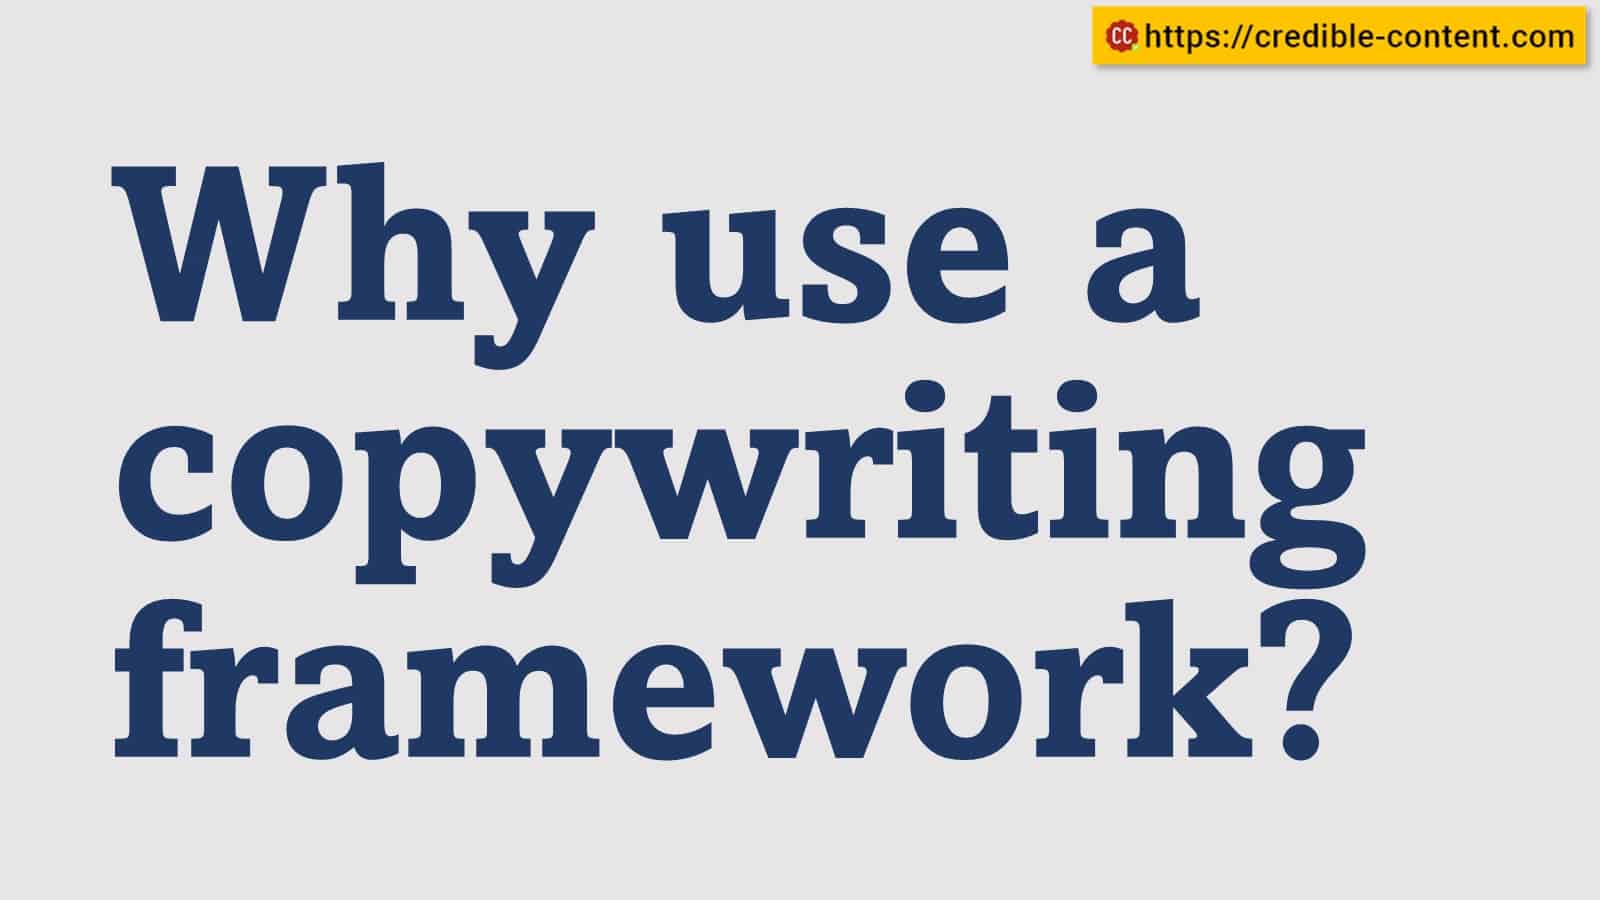 Why use a copywriting framework